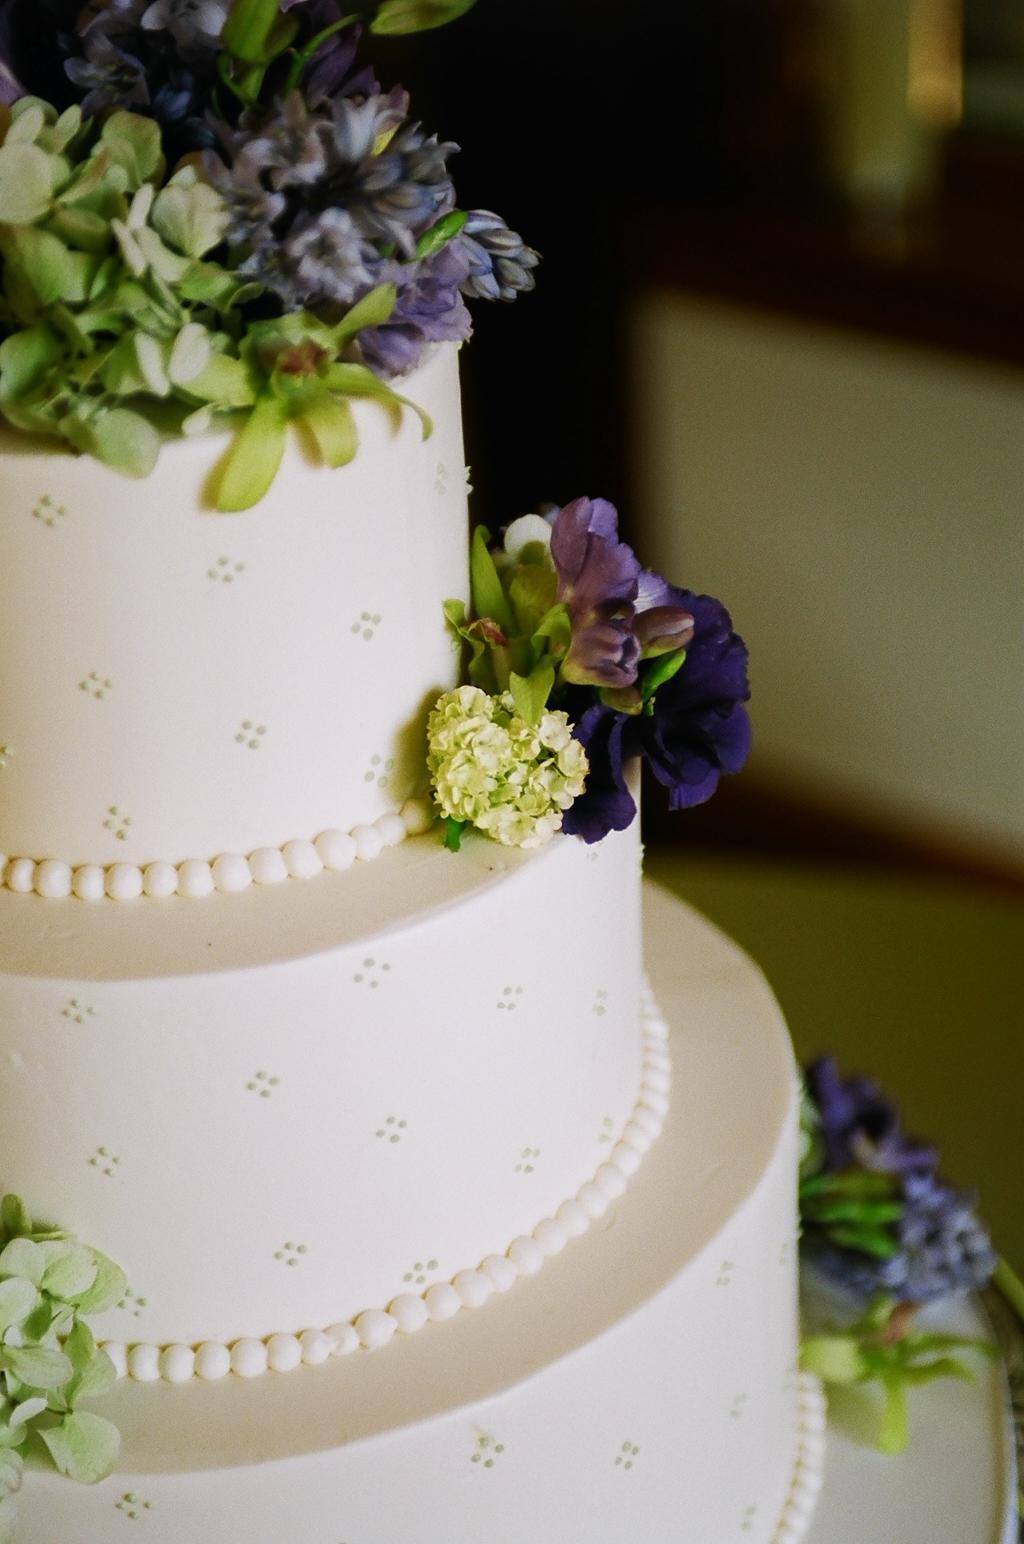 Decorated Wedding Cakes